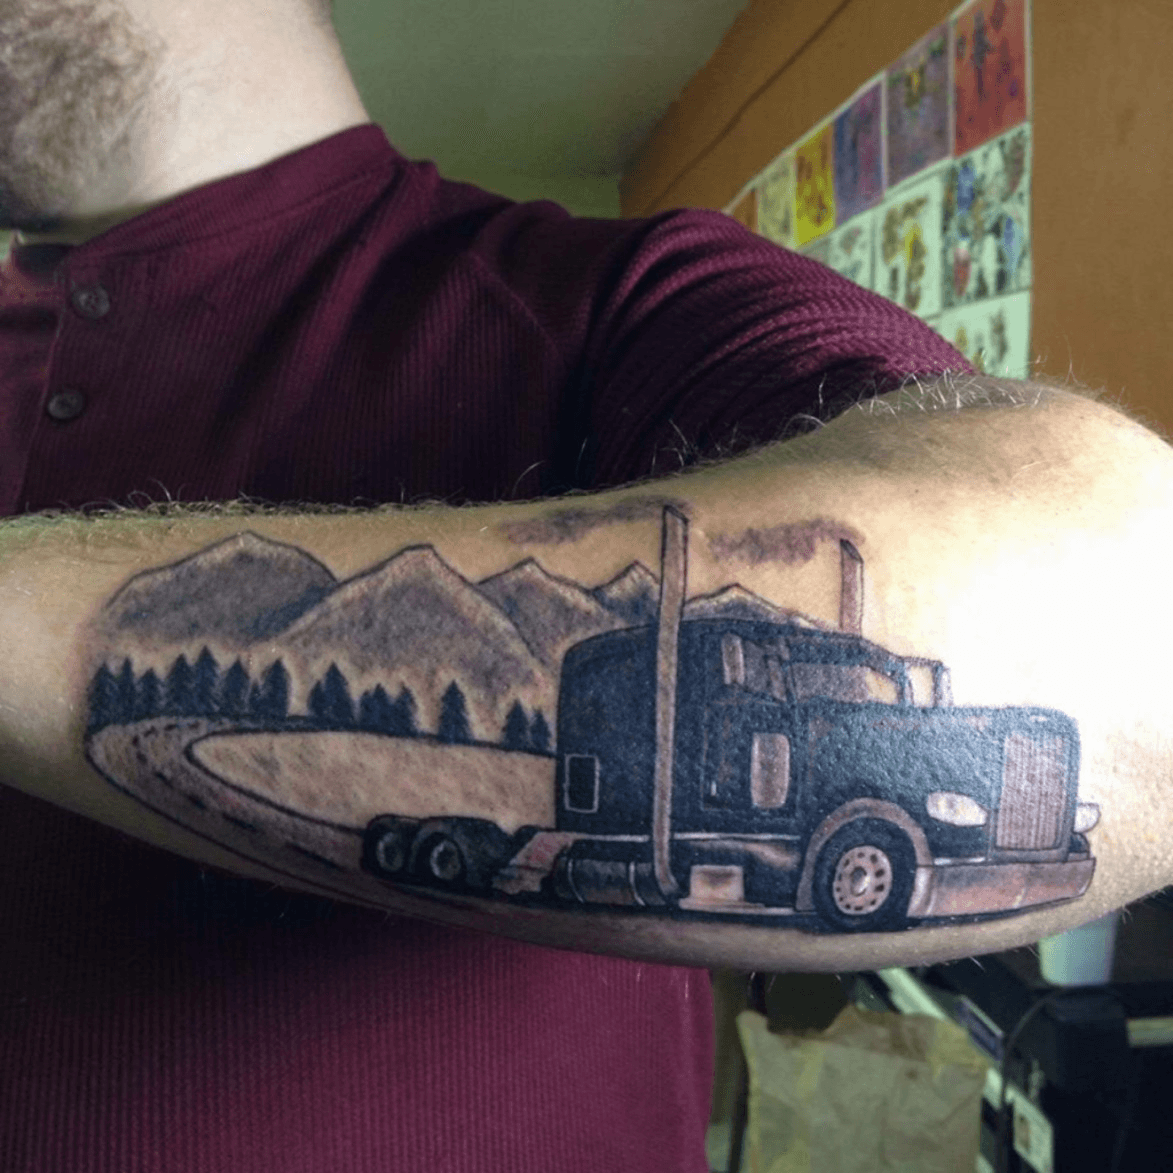 Tattoo uploaded by Lincoln Tansil  Semi truck i dod a few weeks ago art  artist apprentice blackandgrey fusionink forearm inkflikted  Tattoodo